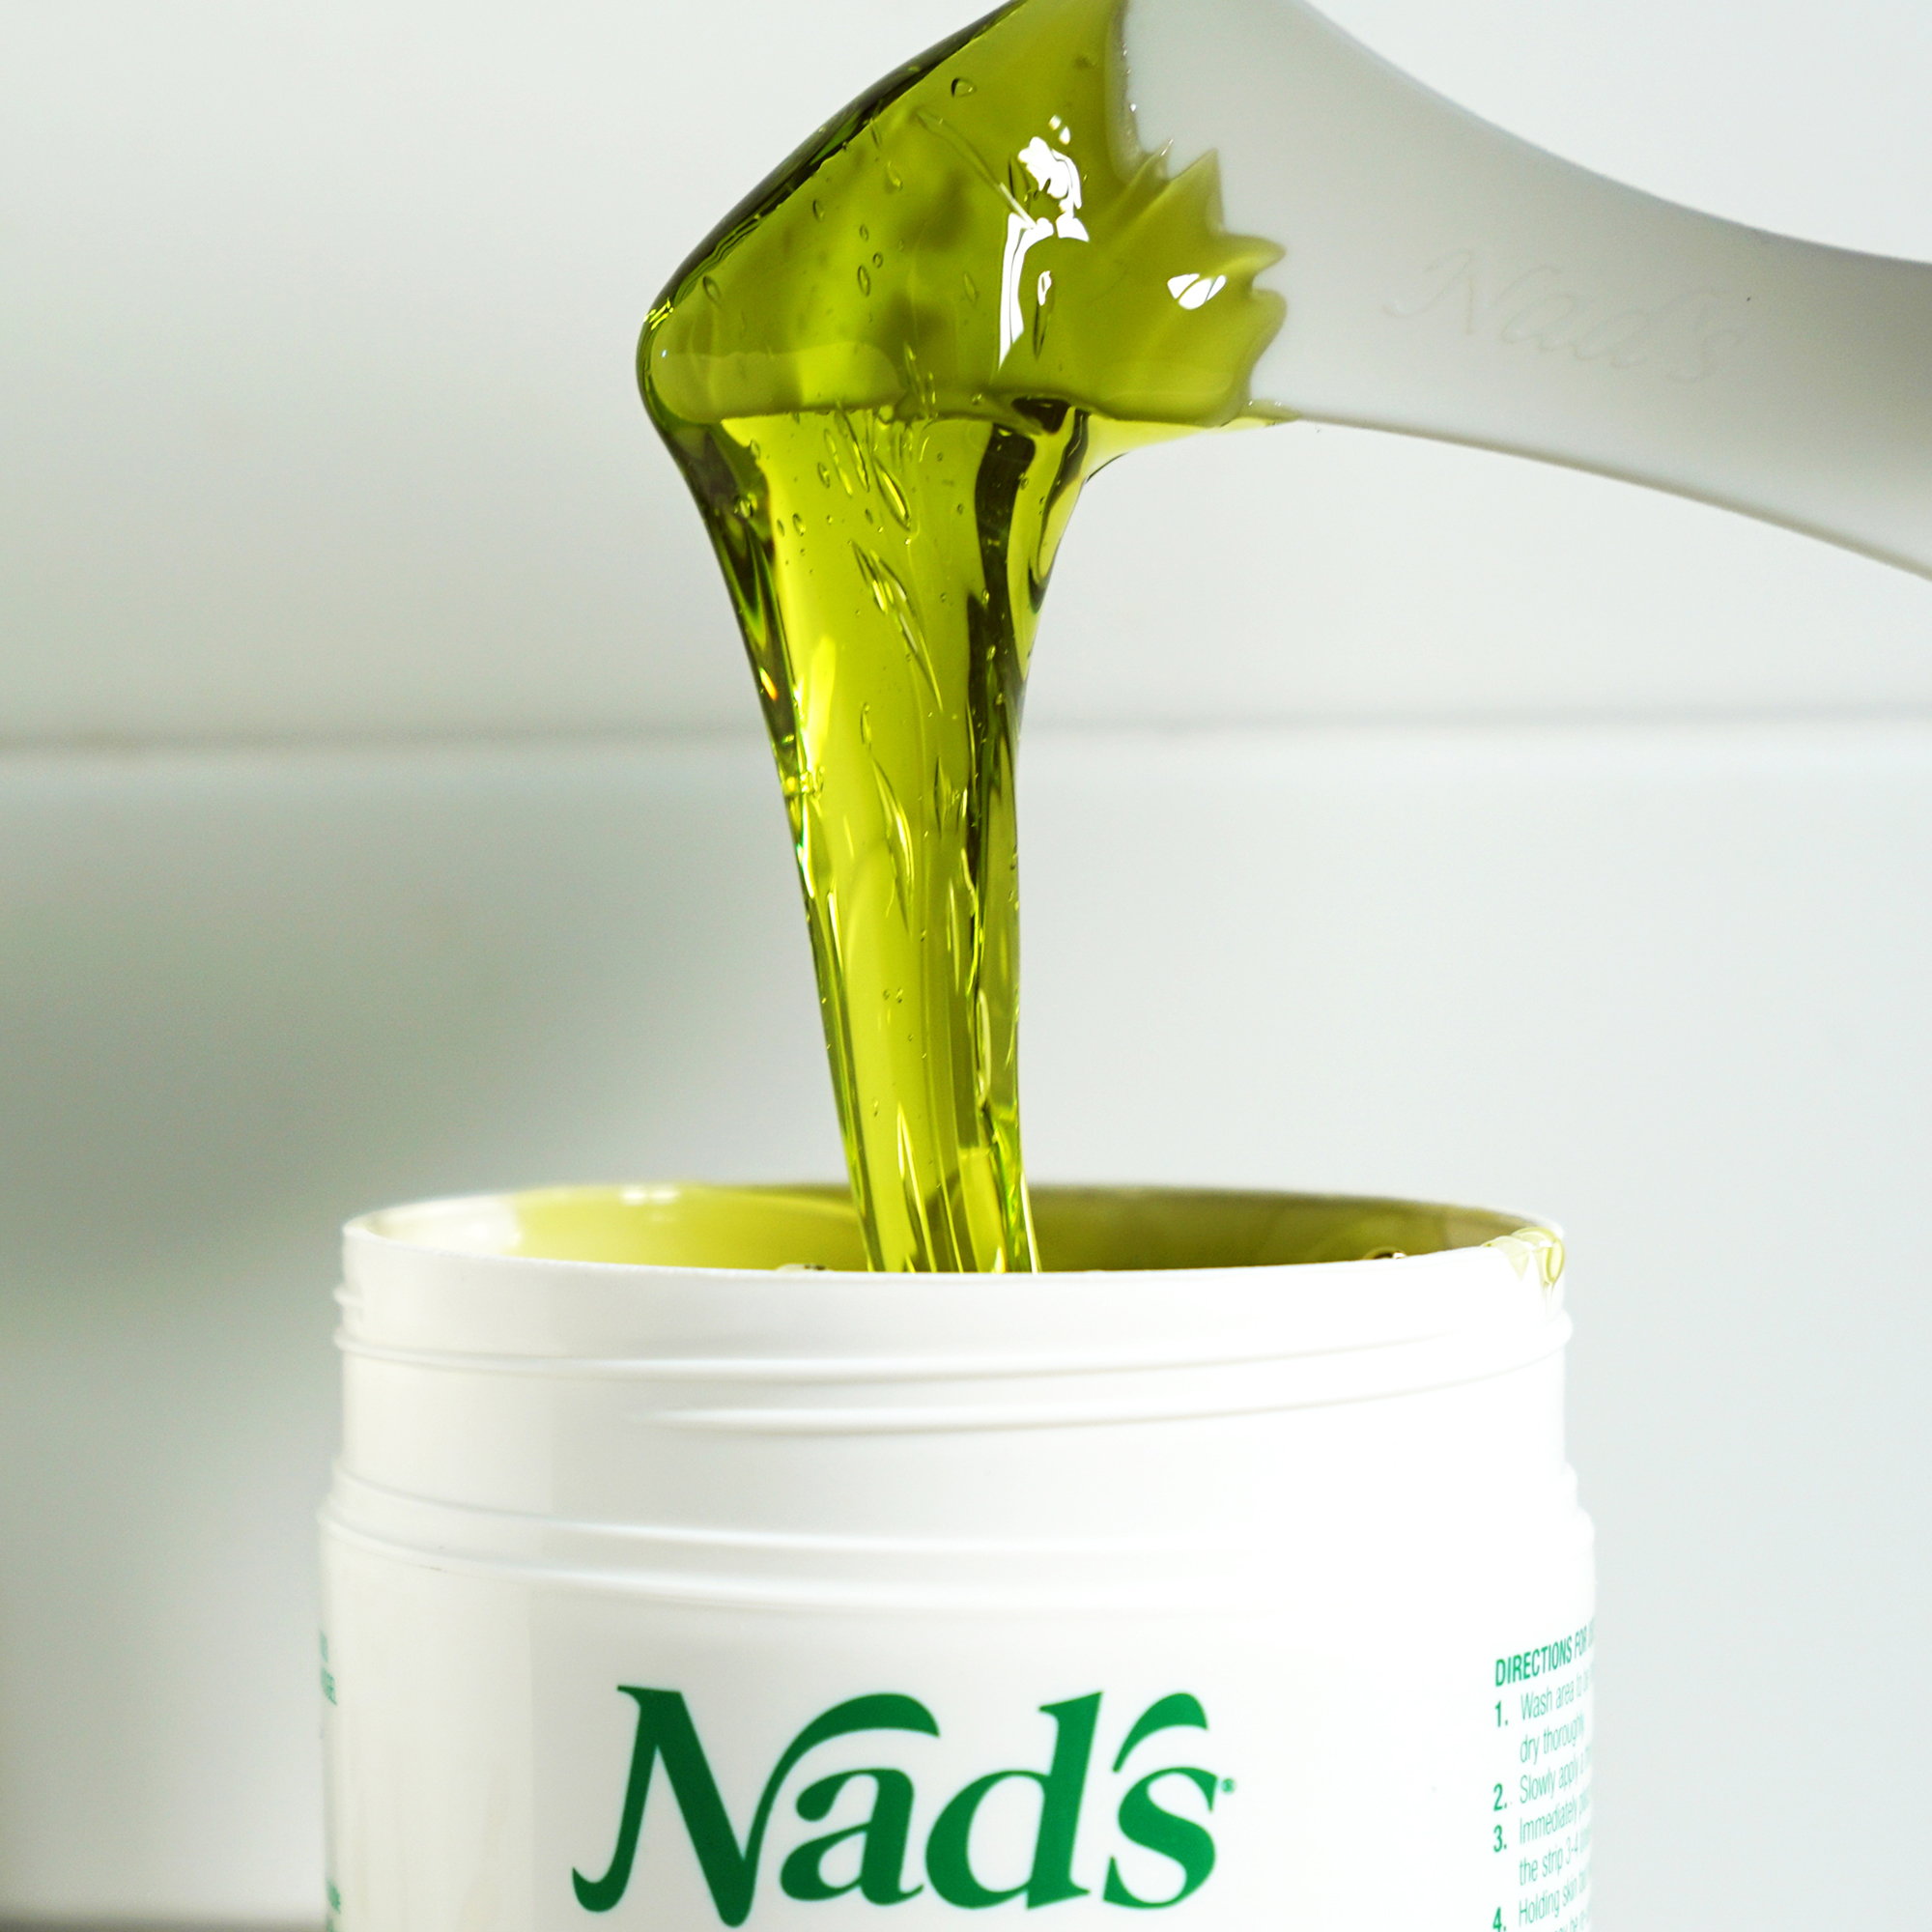 Nad's Natural Hair Removal Gel Wax Kit, 6oz - image 4 of 4